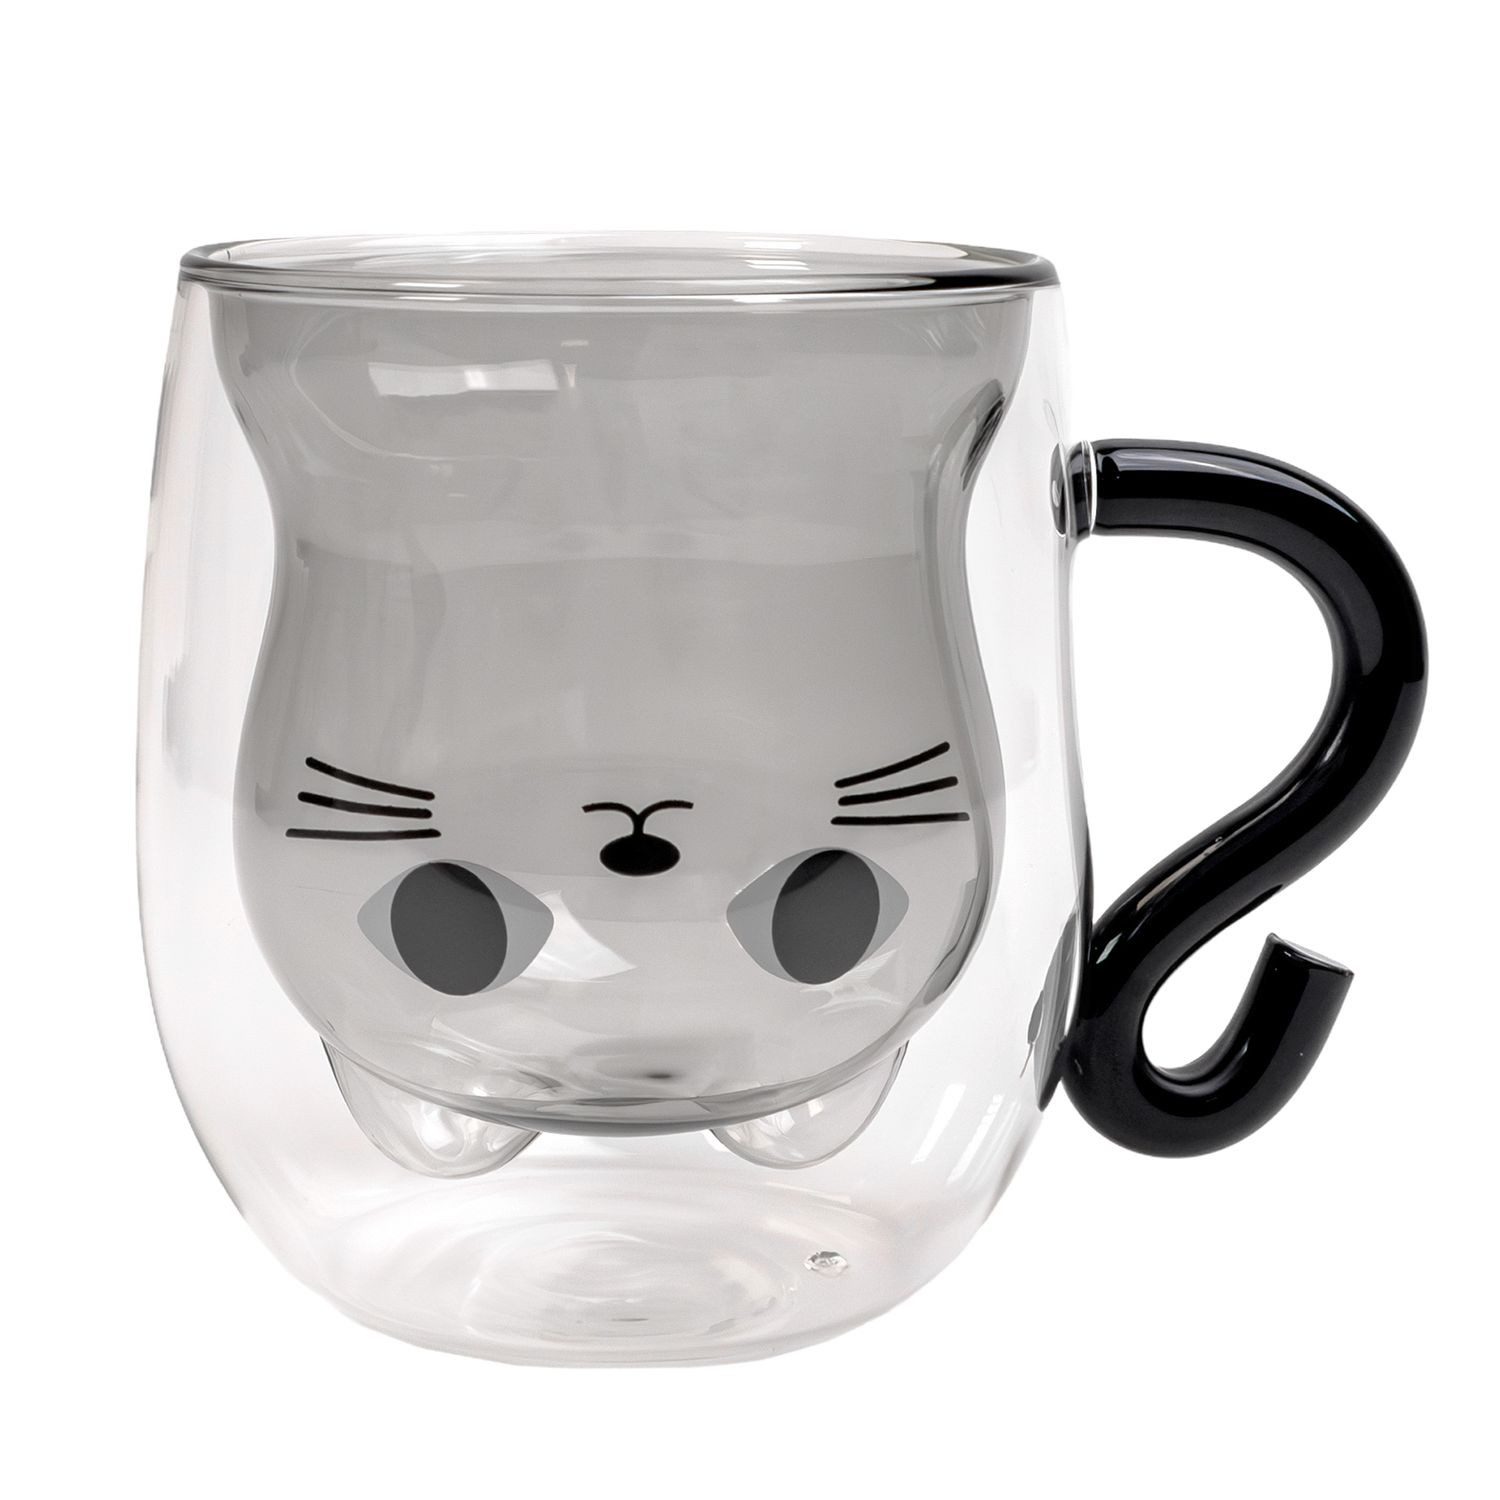 Intirilife Latte-Macchiato-Glas, Glas, Thermo Glas Doppelwandig mit Design Katze 200ml Kaffeetasse Teetasse